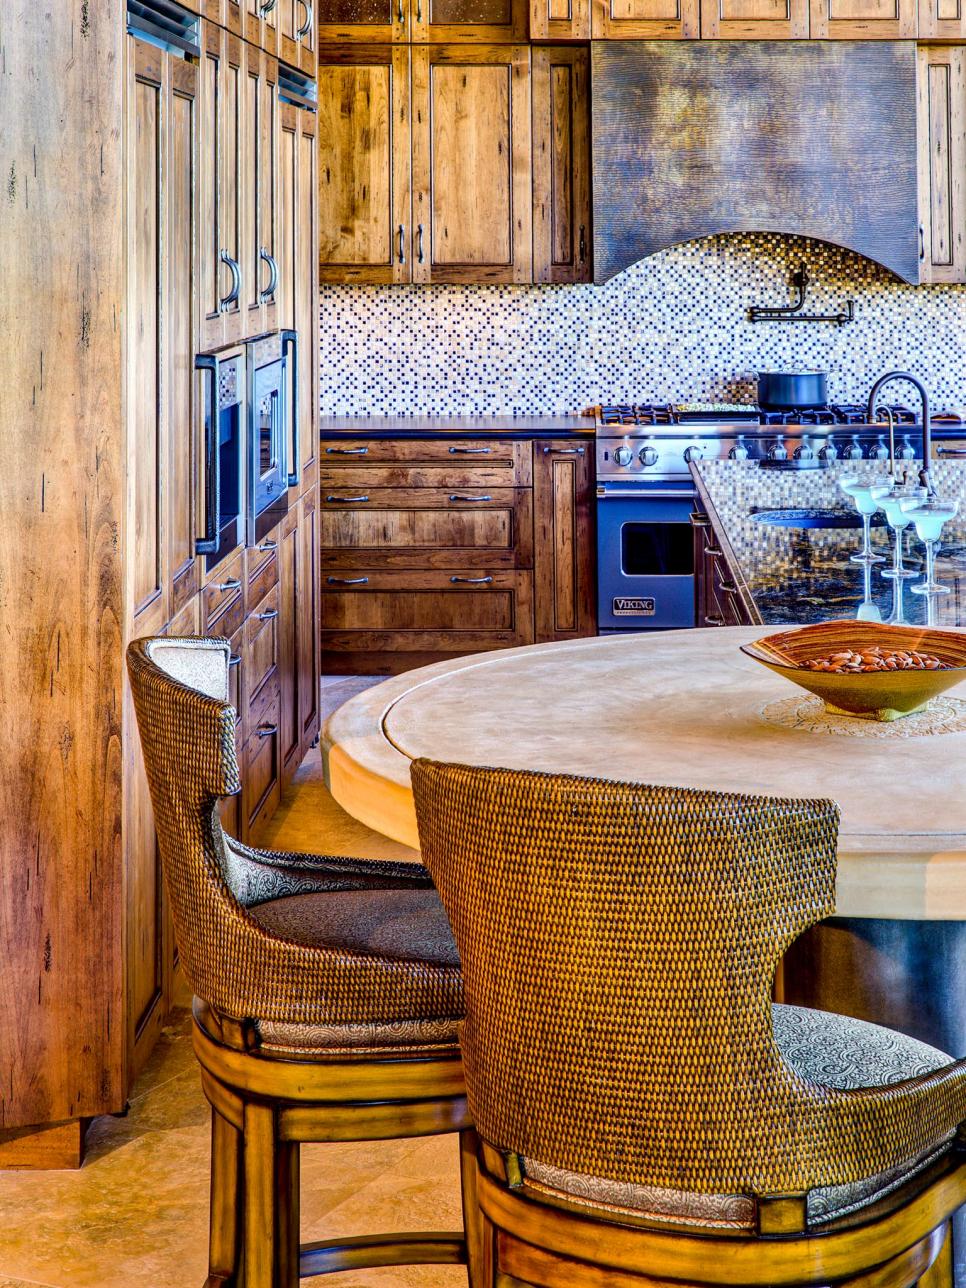 Natural Wood Kitchen Cabinets With Mosaic Tile Backsplash